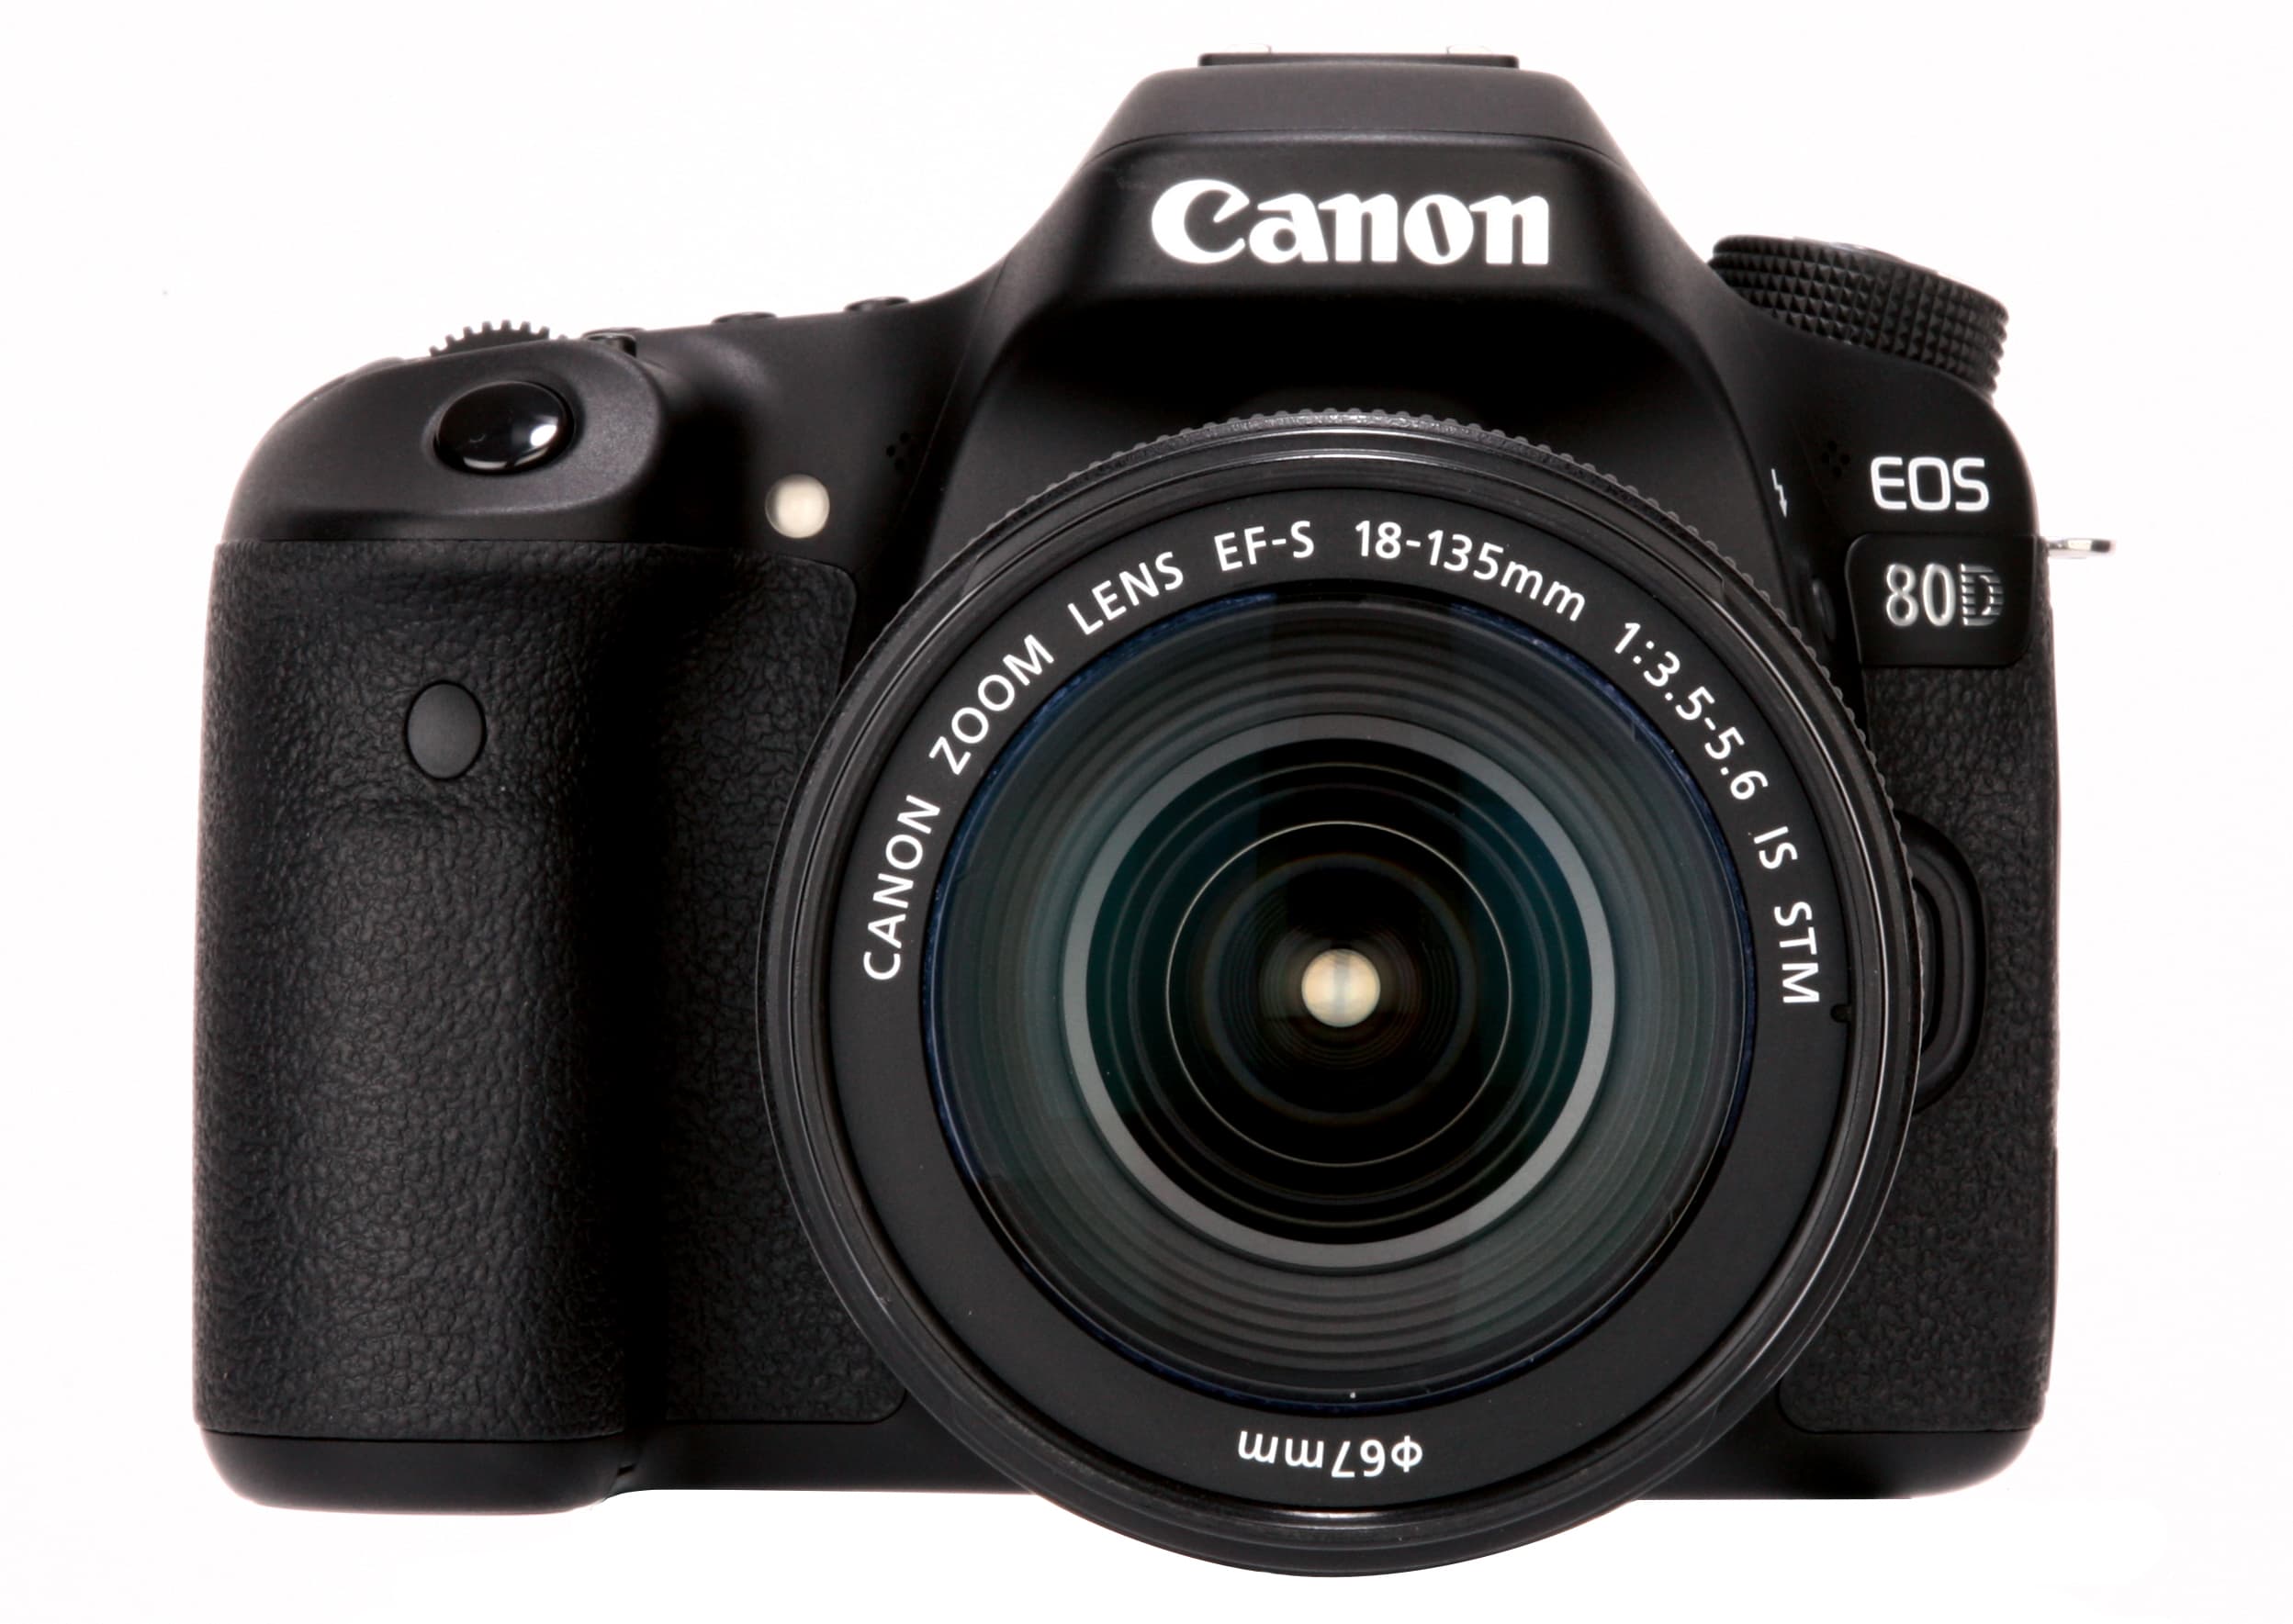 Canon EOS 80D Review - Page 3 of 7 - Amateur Photographer